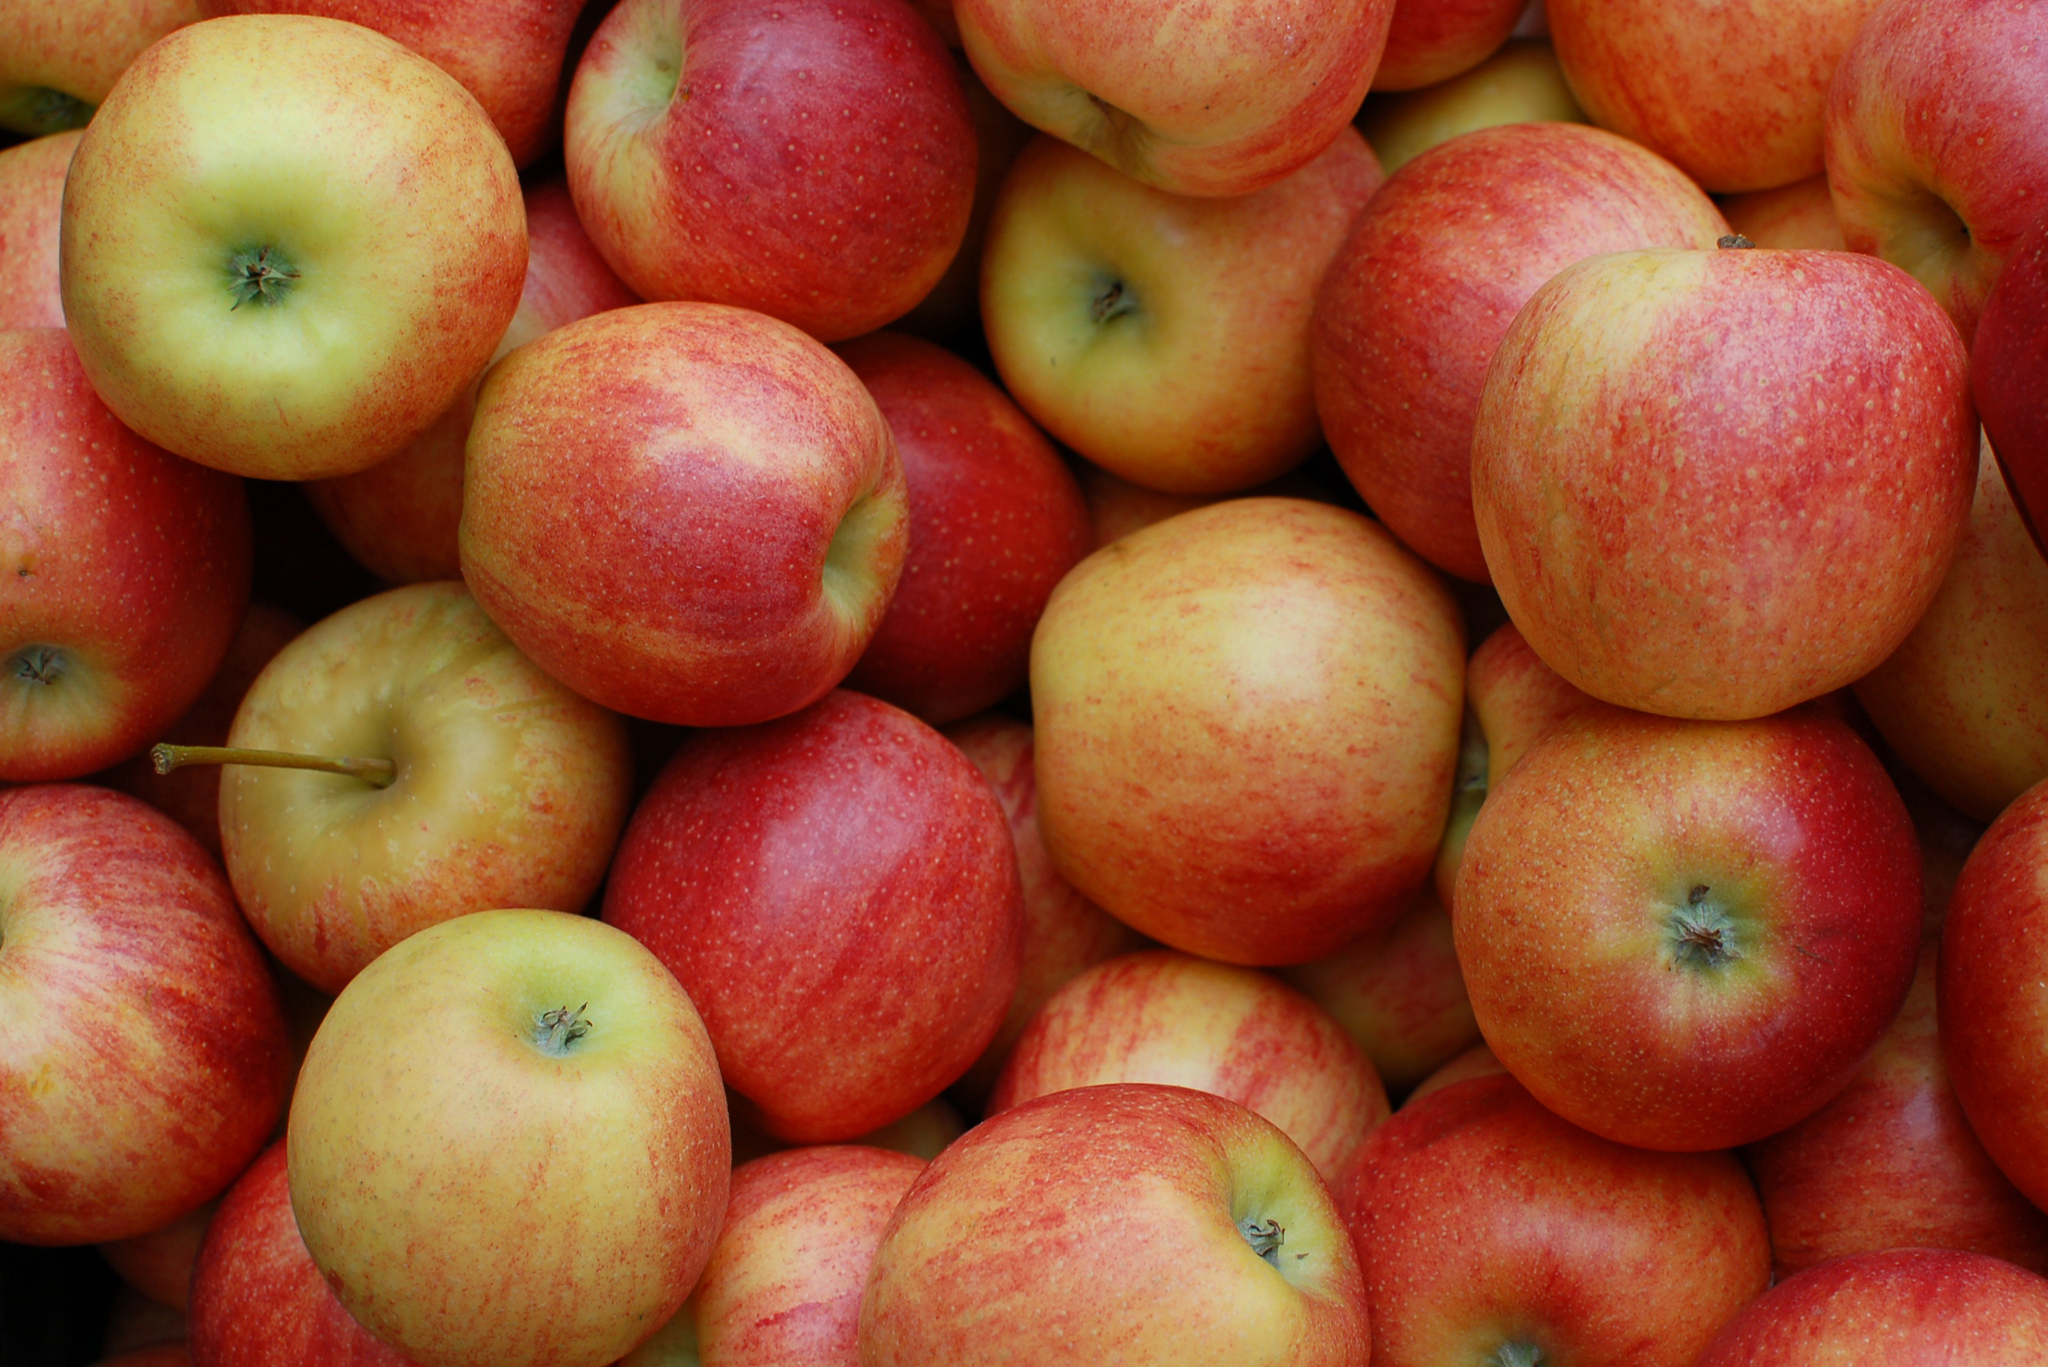 Product Distributors of fresh Apples